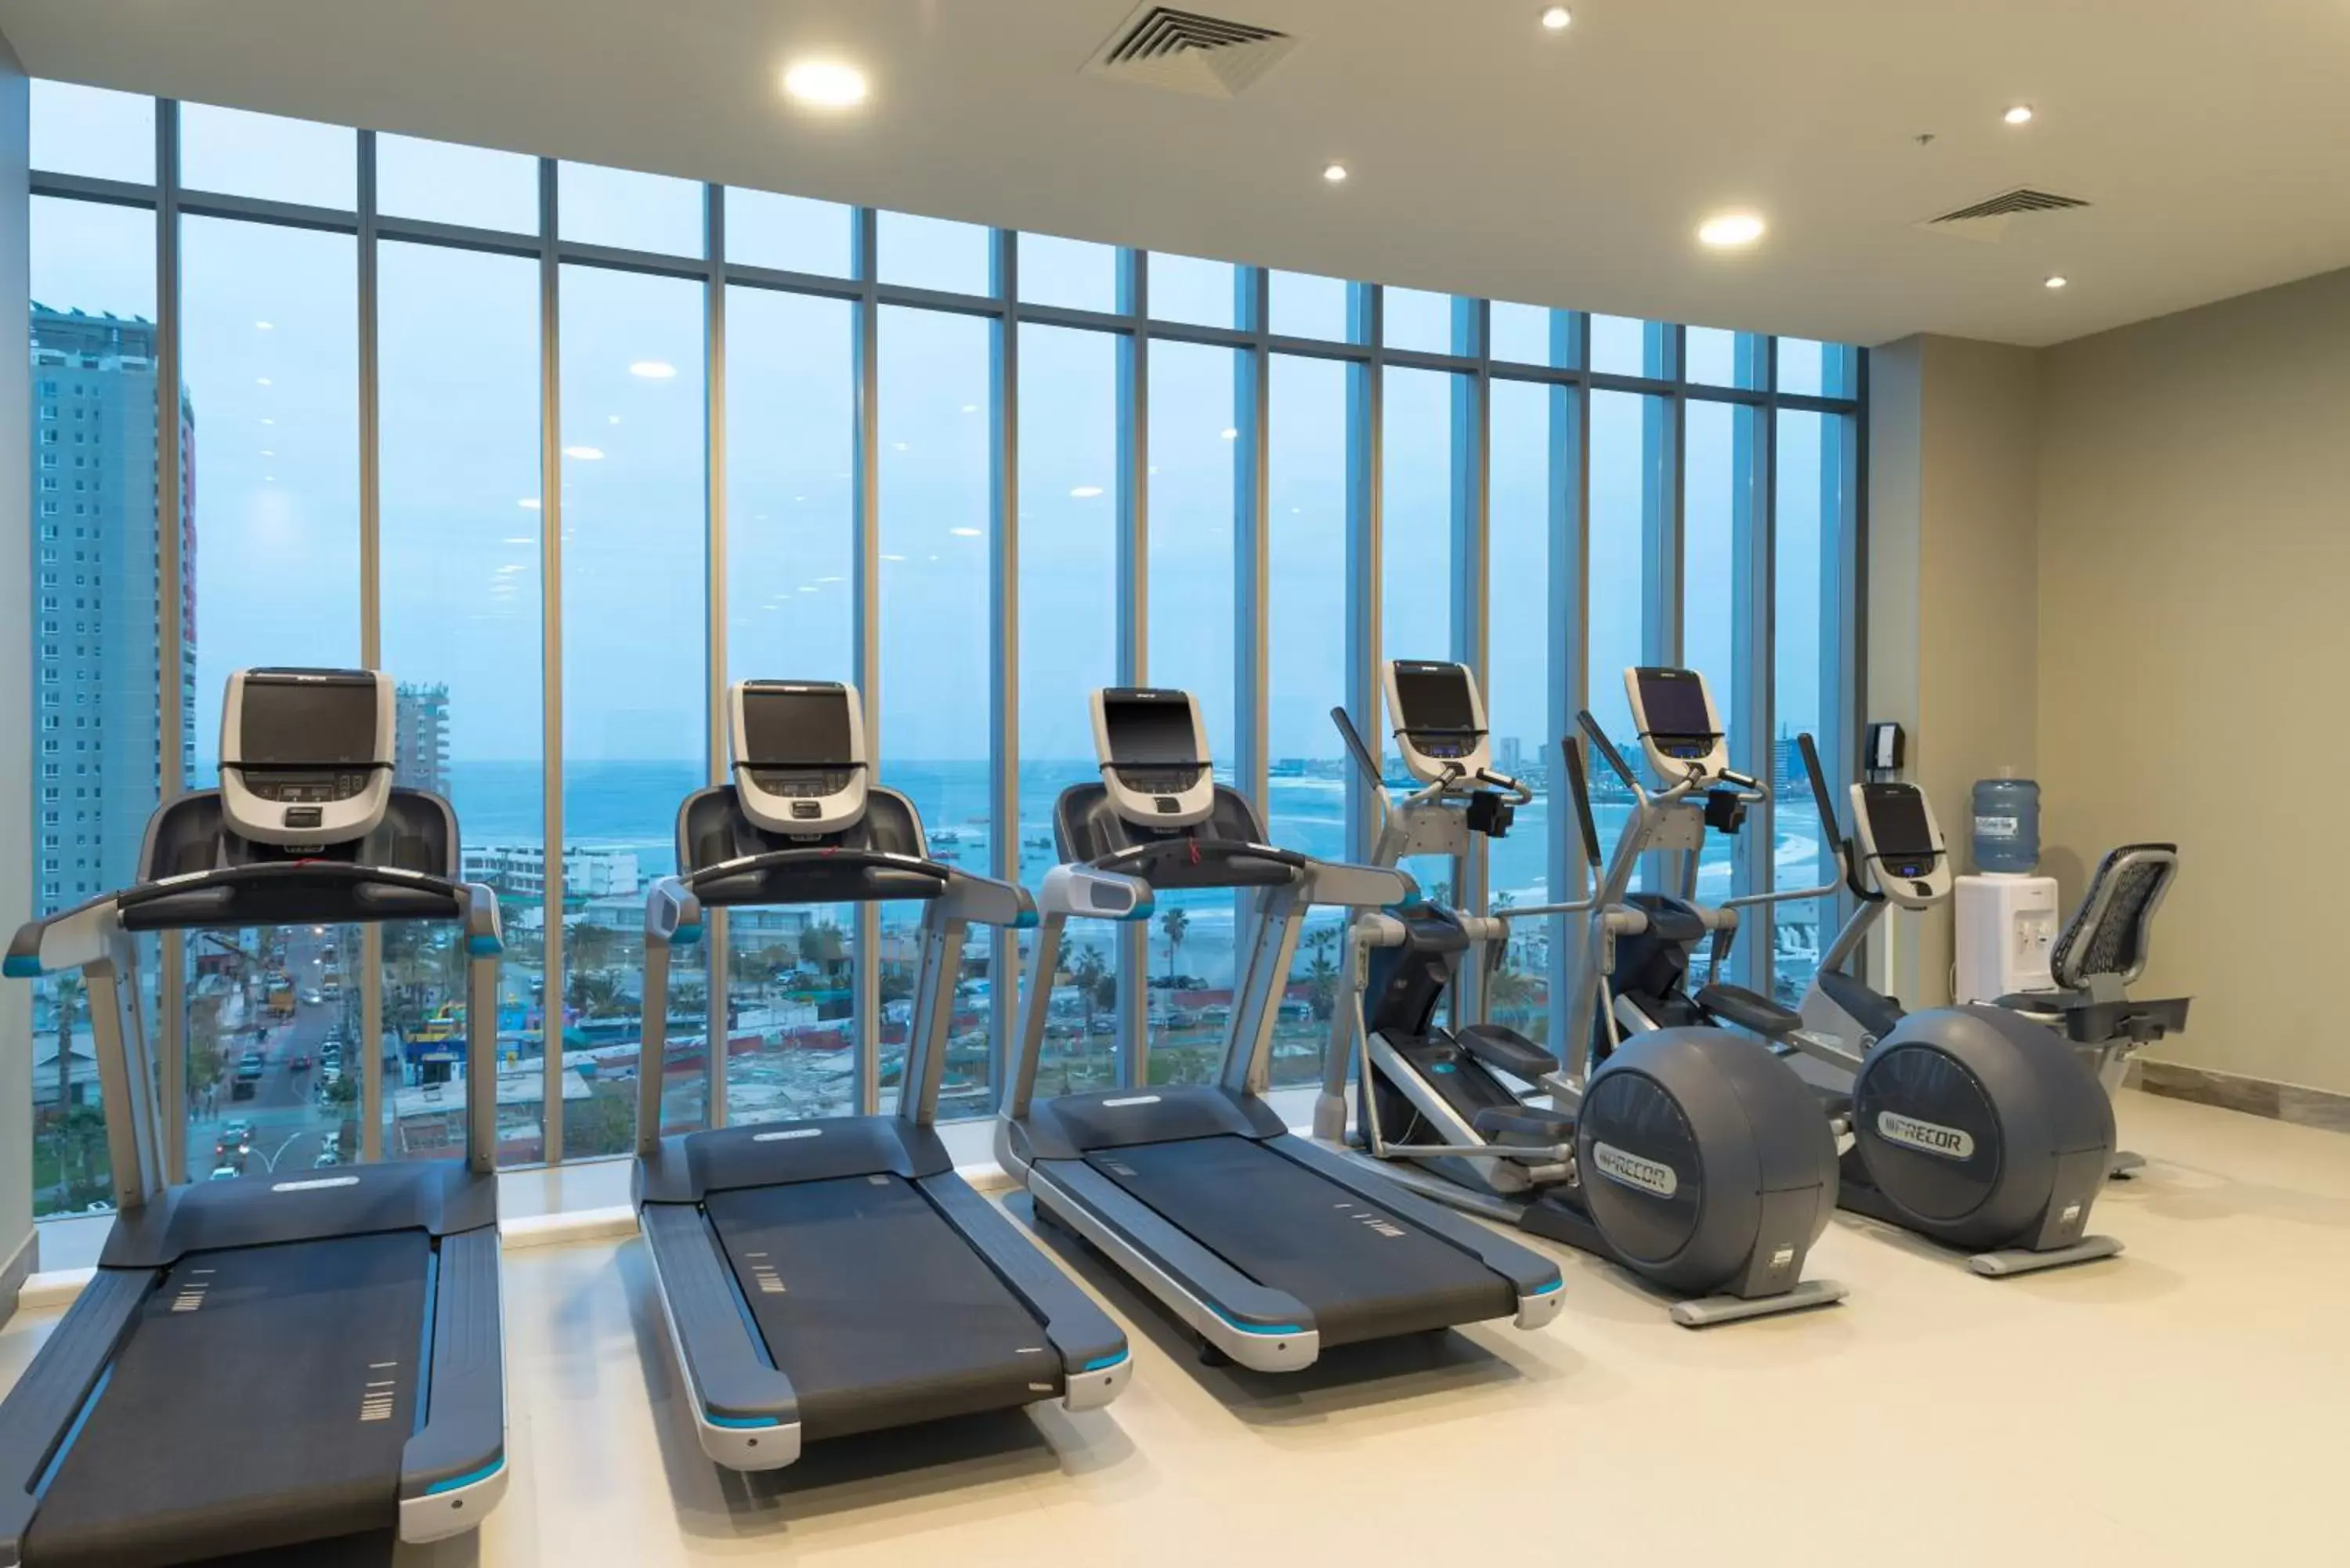 Fitness centre/facilities, Fitness Center/Facilities in Hilton Garden Inn Iquique